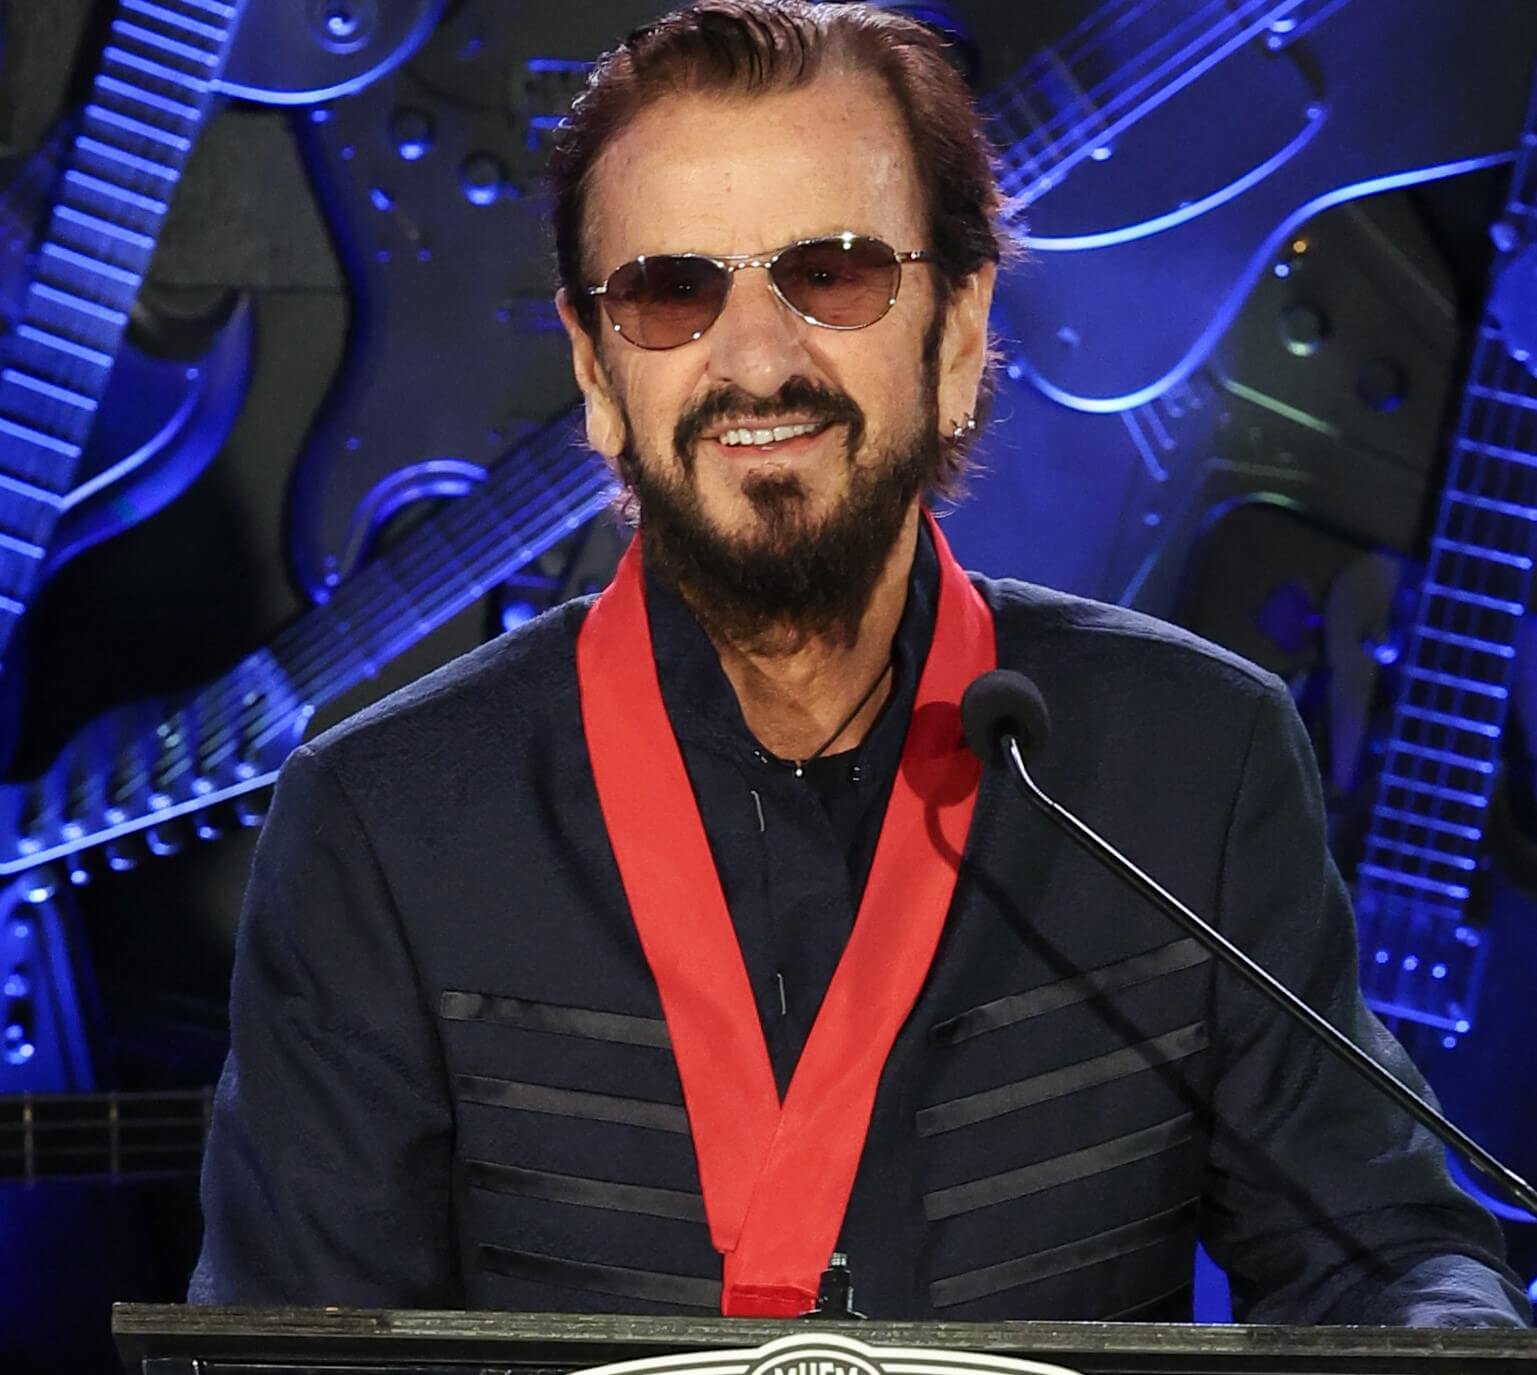 The Beatles' Ringo Starr wearing glasses